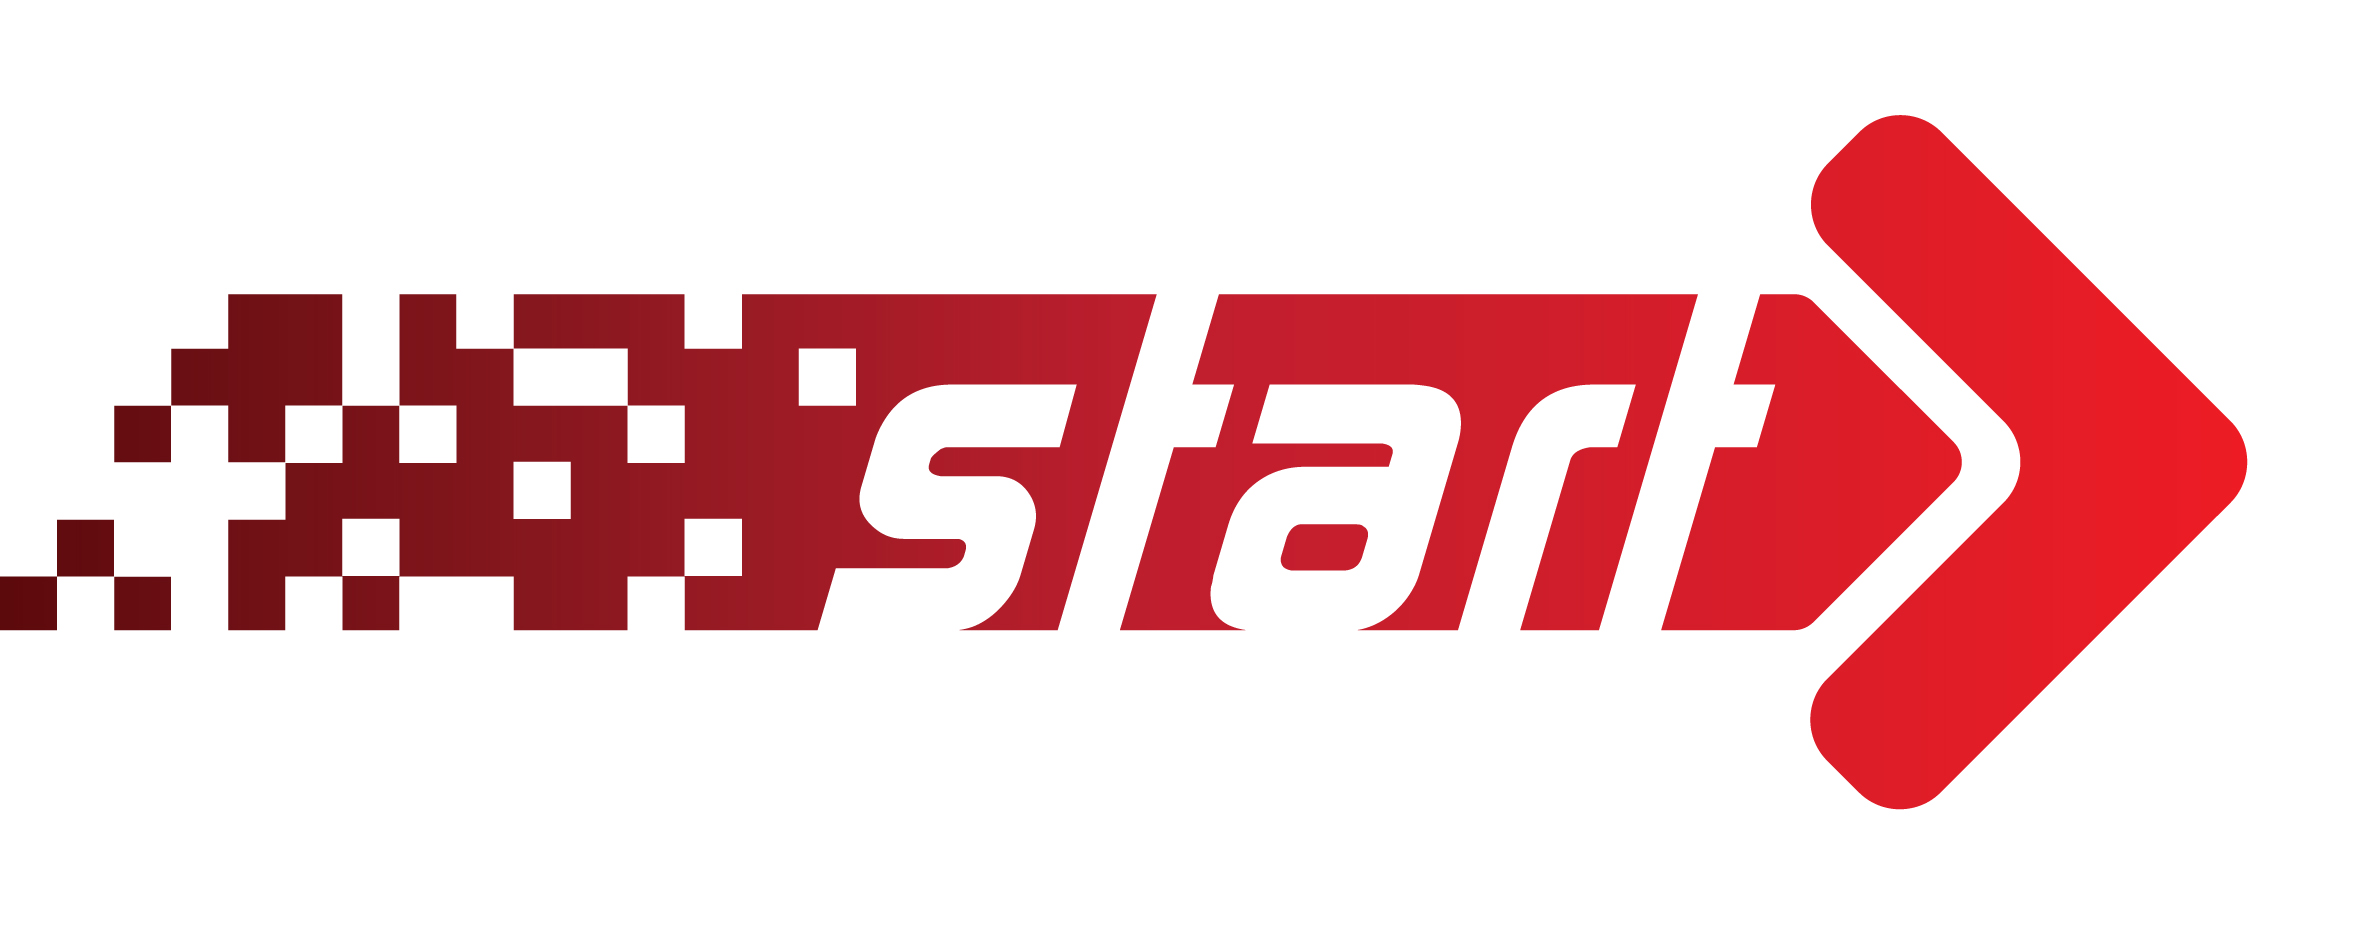 Cut start. Start логотип. Надпись старт. Autostart логотип. Start вектор.